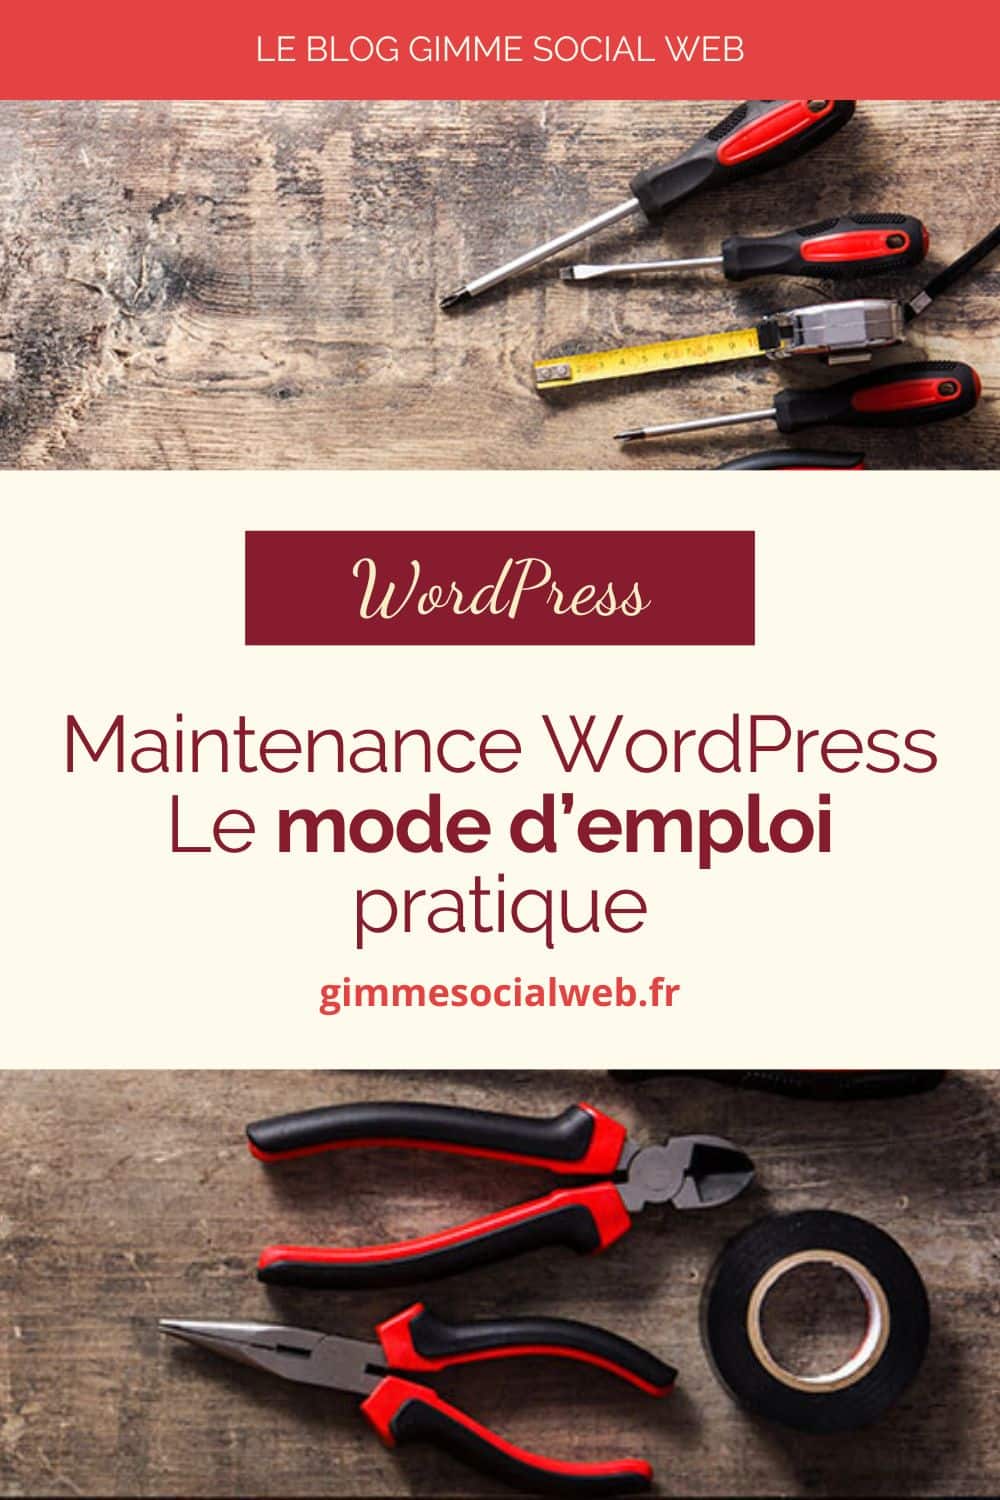 Epingle Pinterest - Gimme Social Web - maintenance WordPress